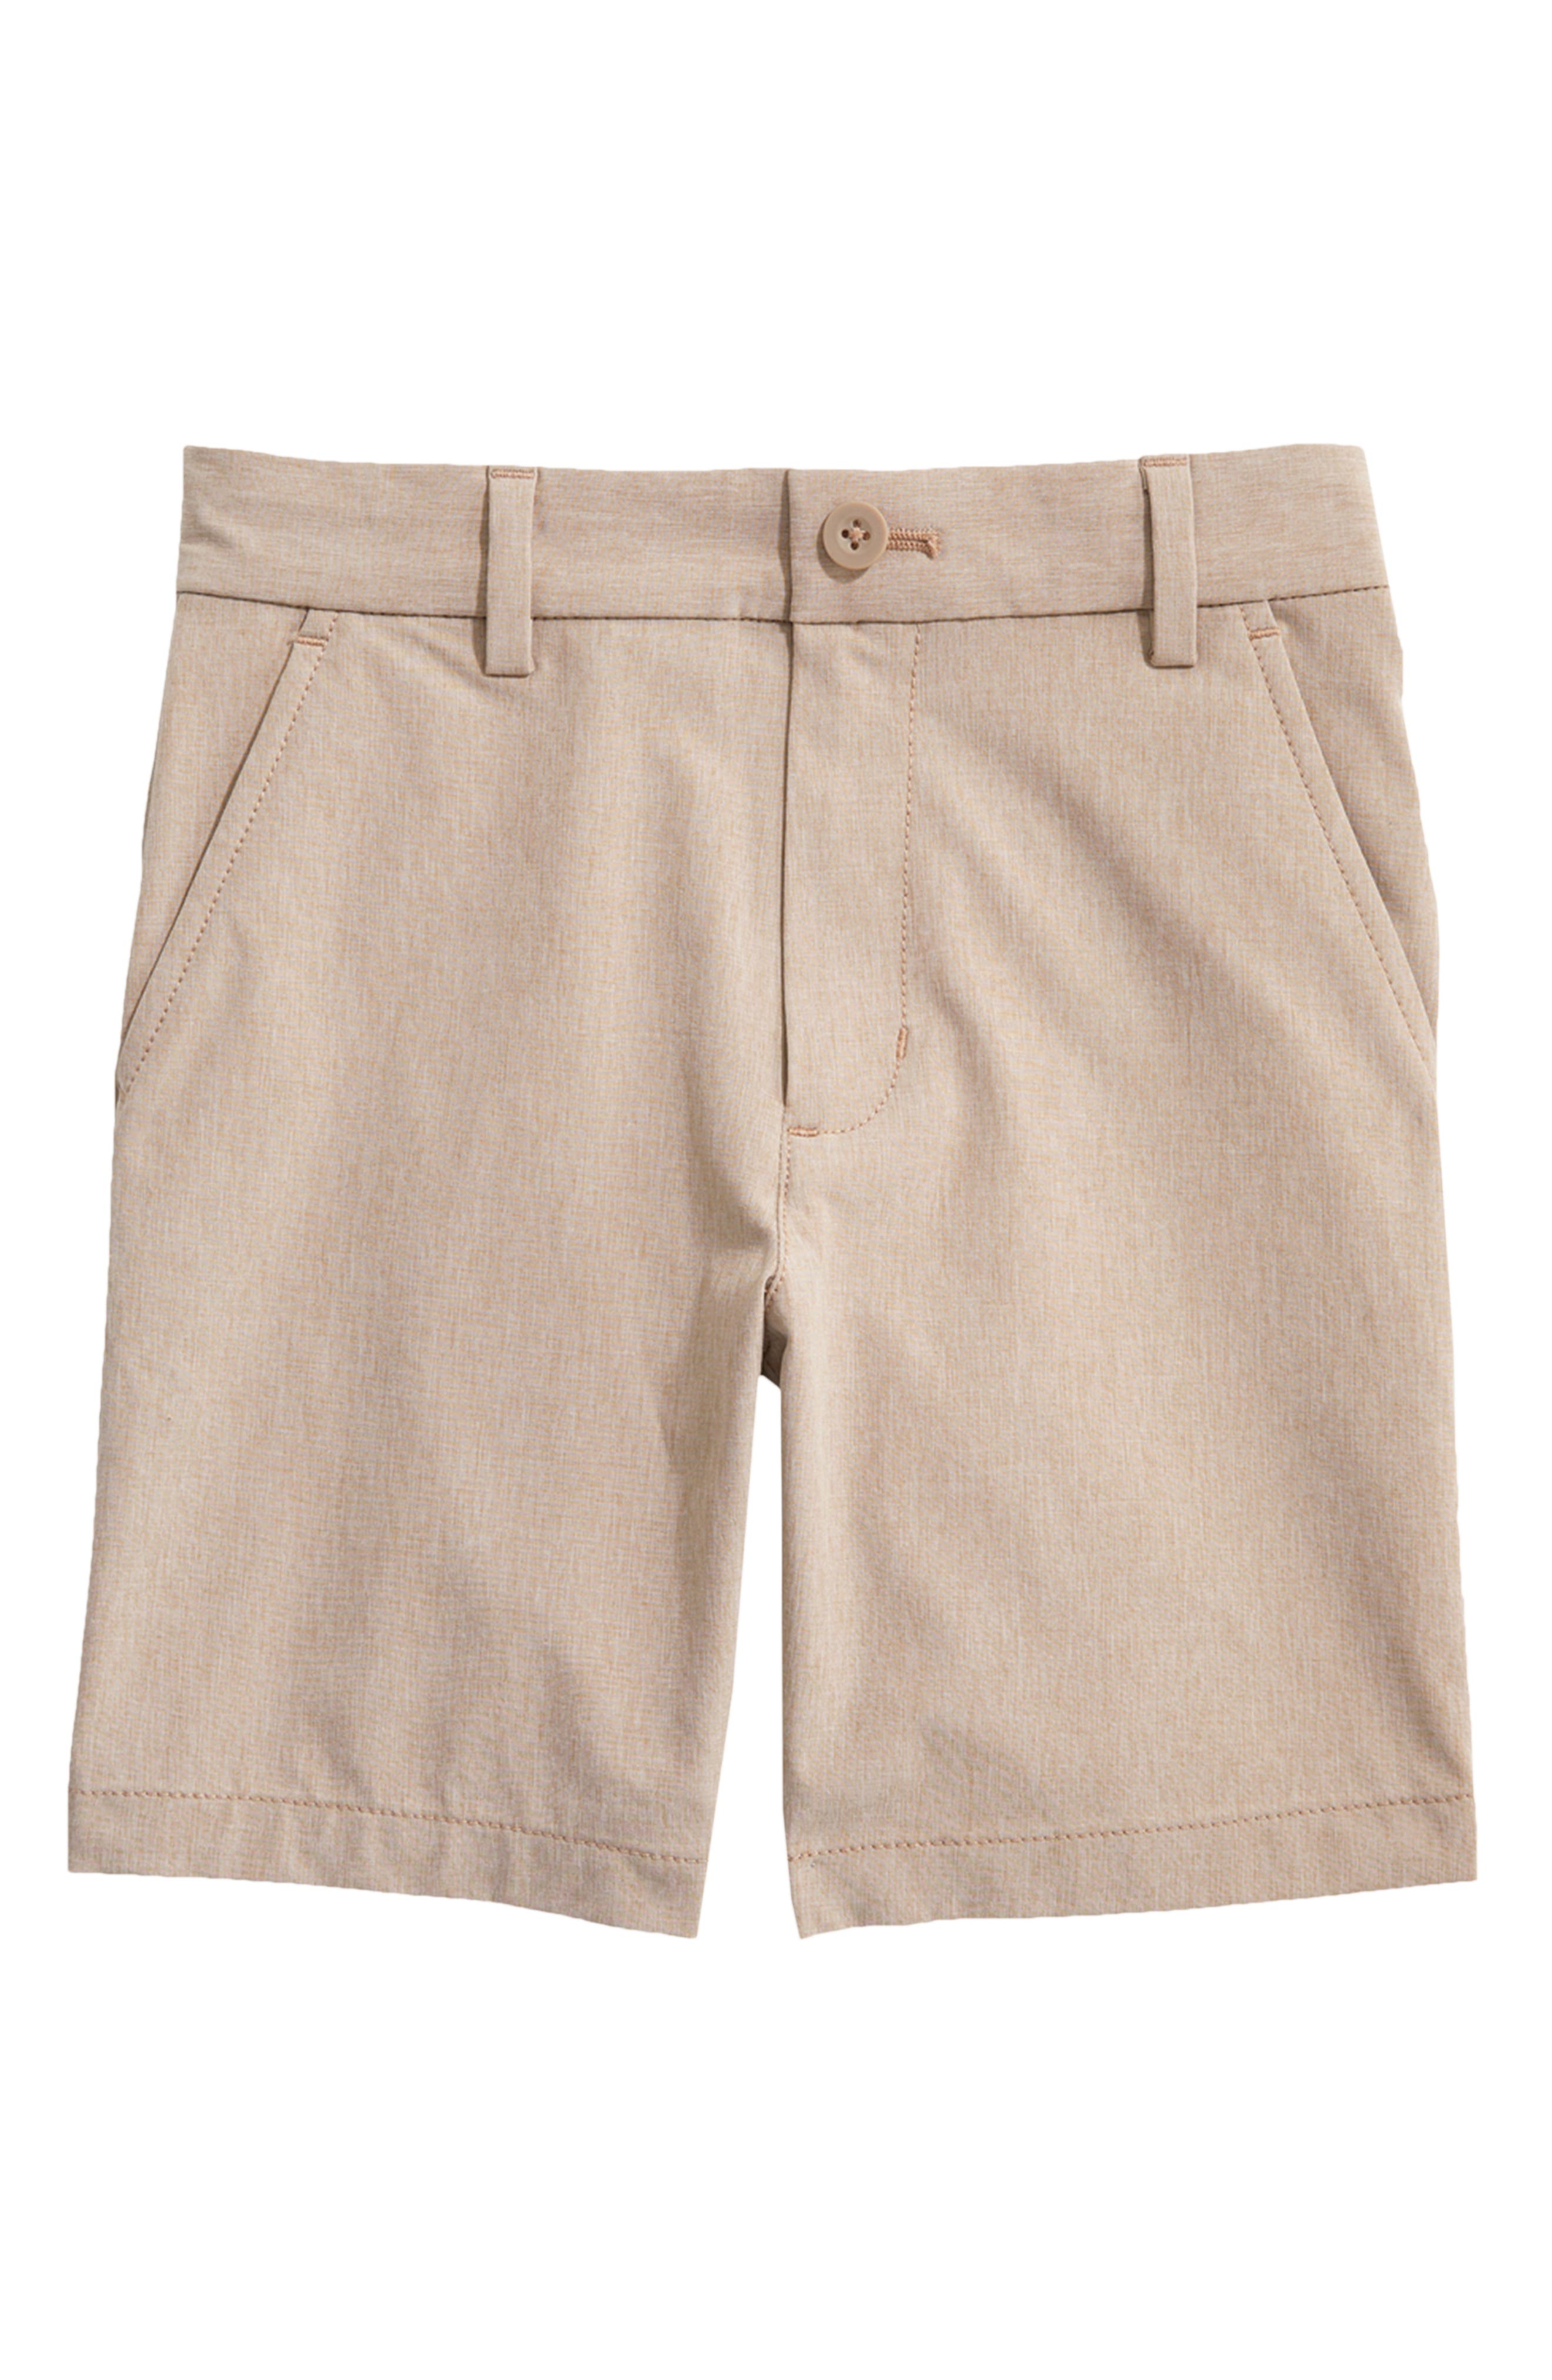 Bienzoe Boys Shorts Boy's Cotton Twill Elastic Waist Shorts 